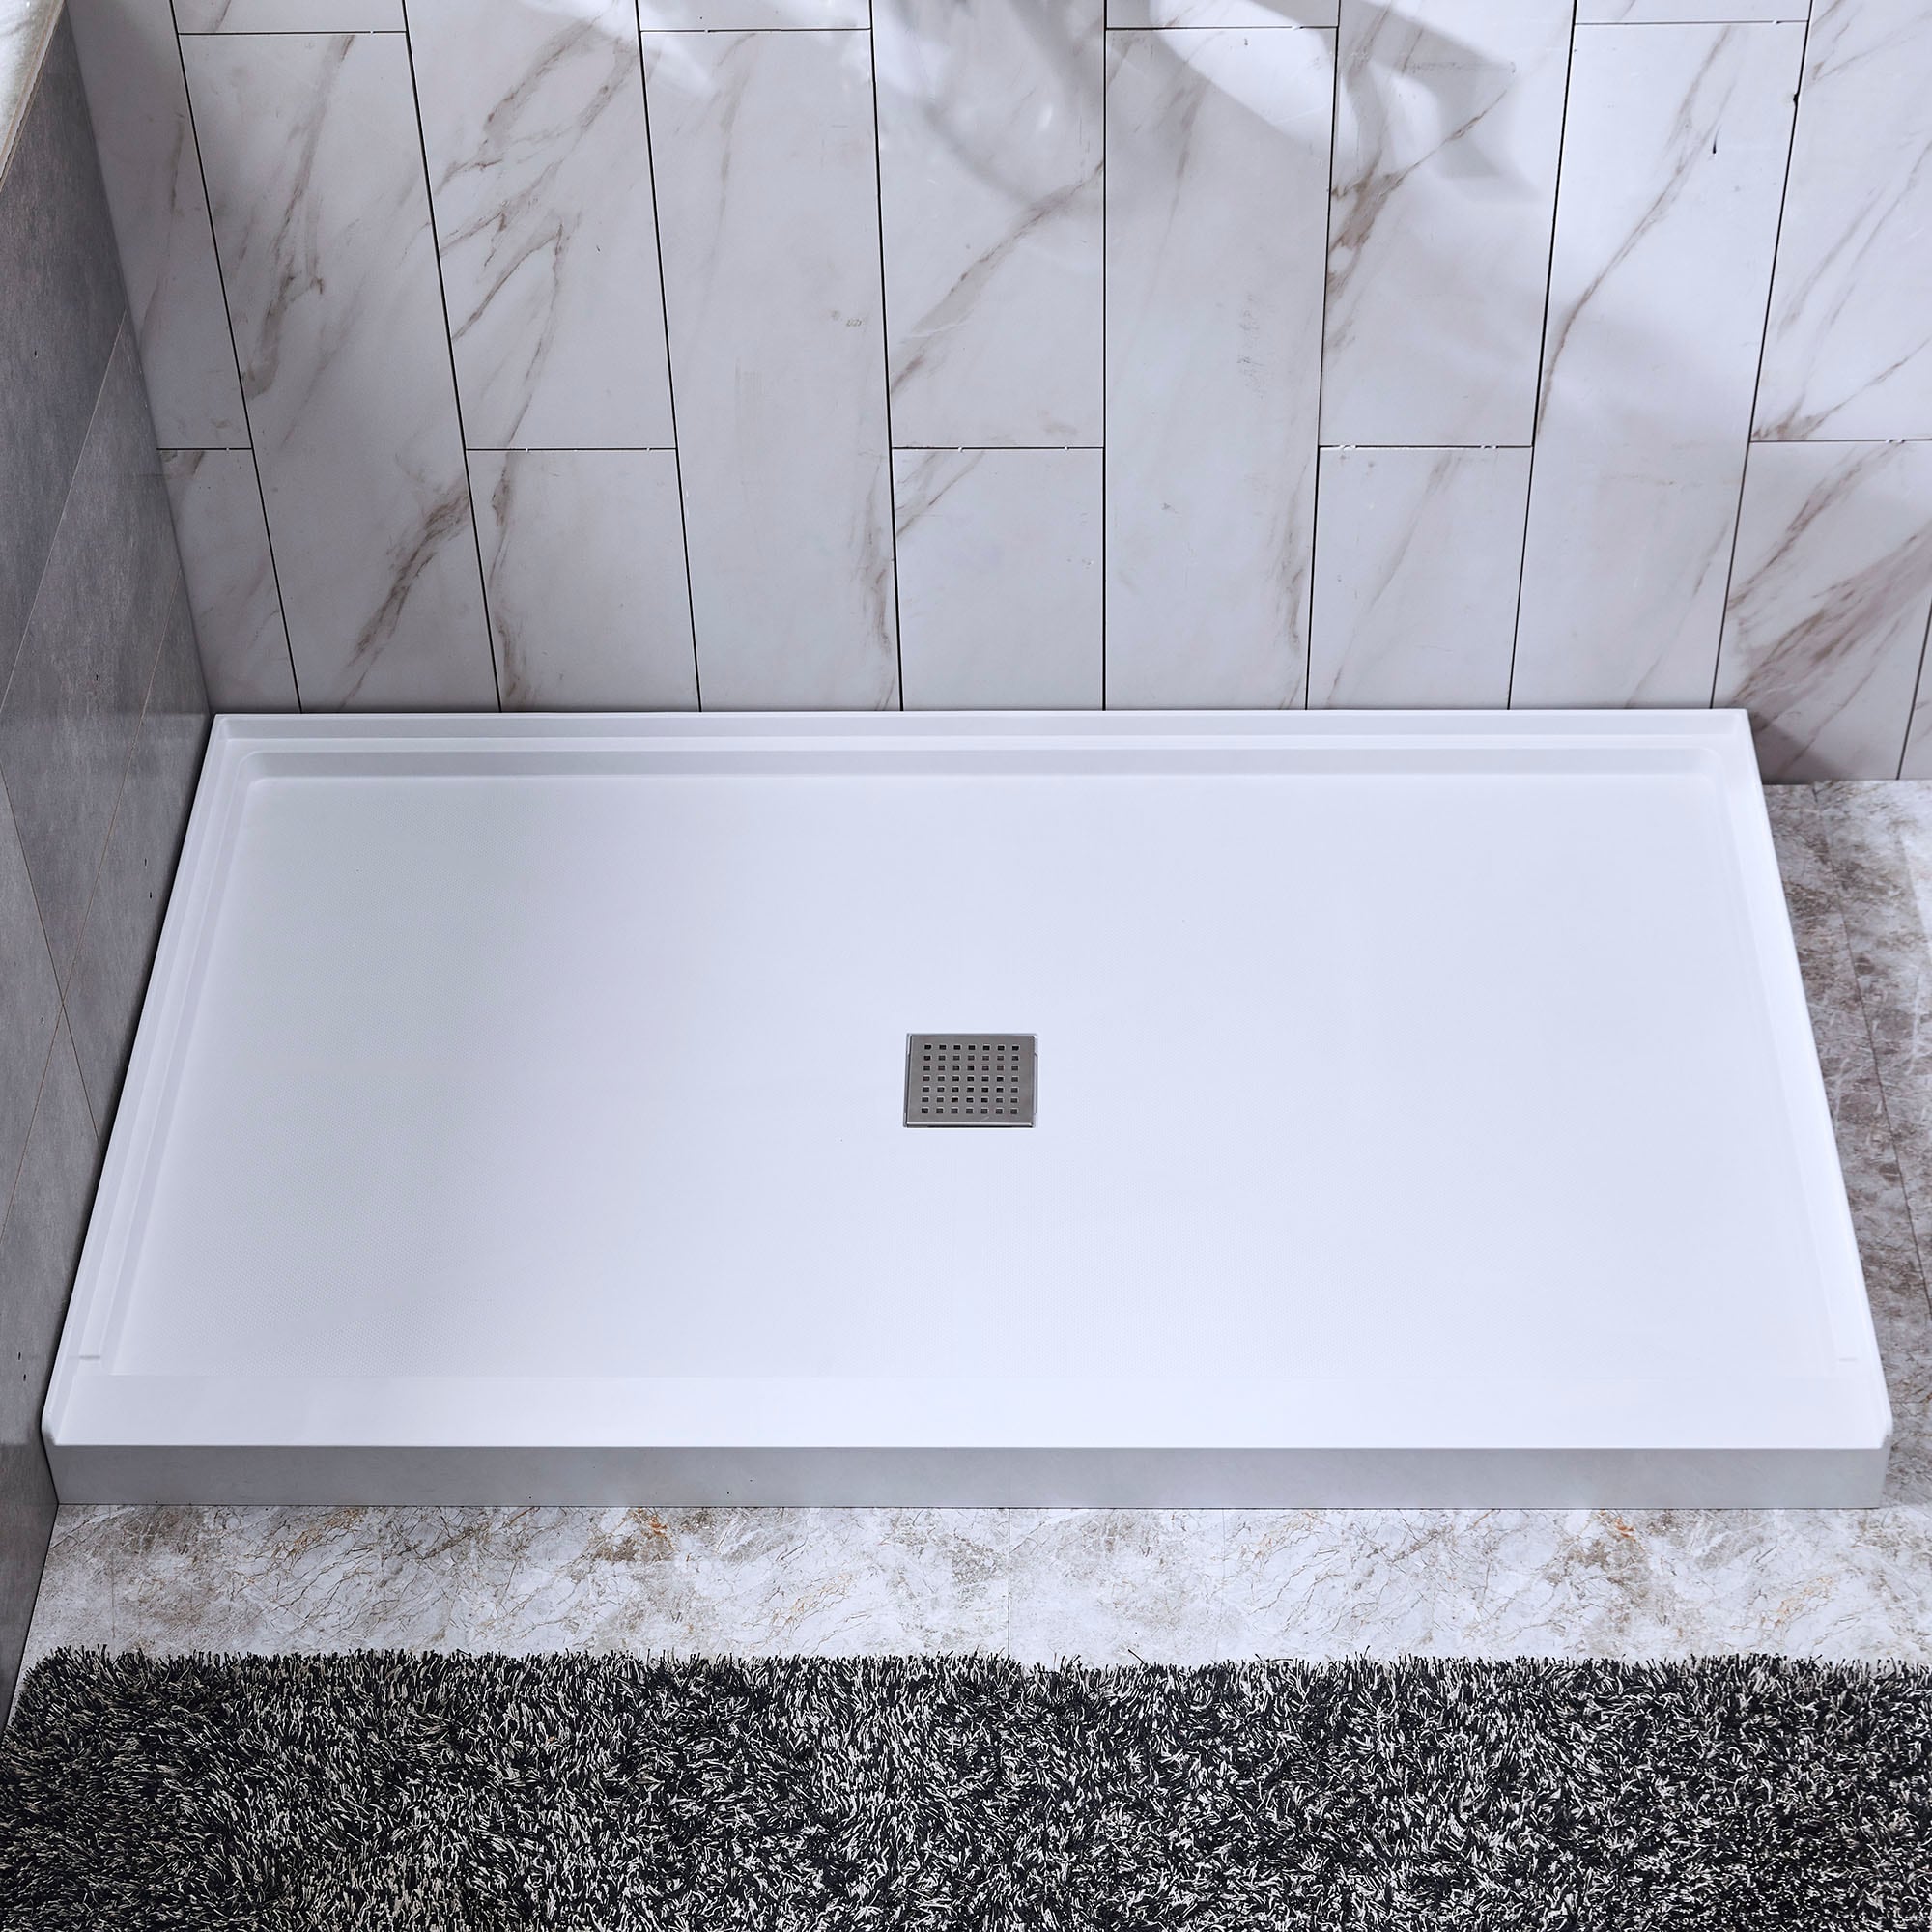 ELEGANT 48'' L x 32'' W x 4'' H Shower Base Pan in White Center Drain  Non-Slip Stainless Steel Shower Drain Cover Included 